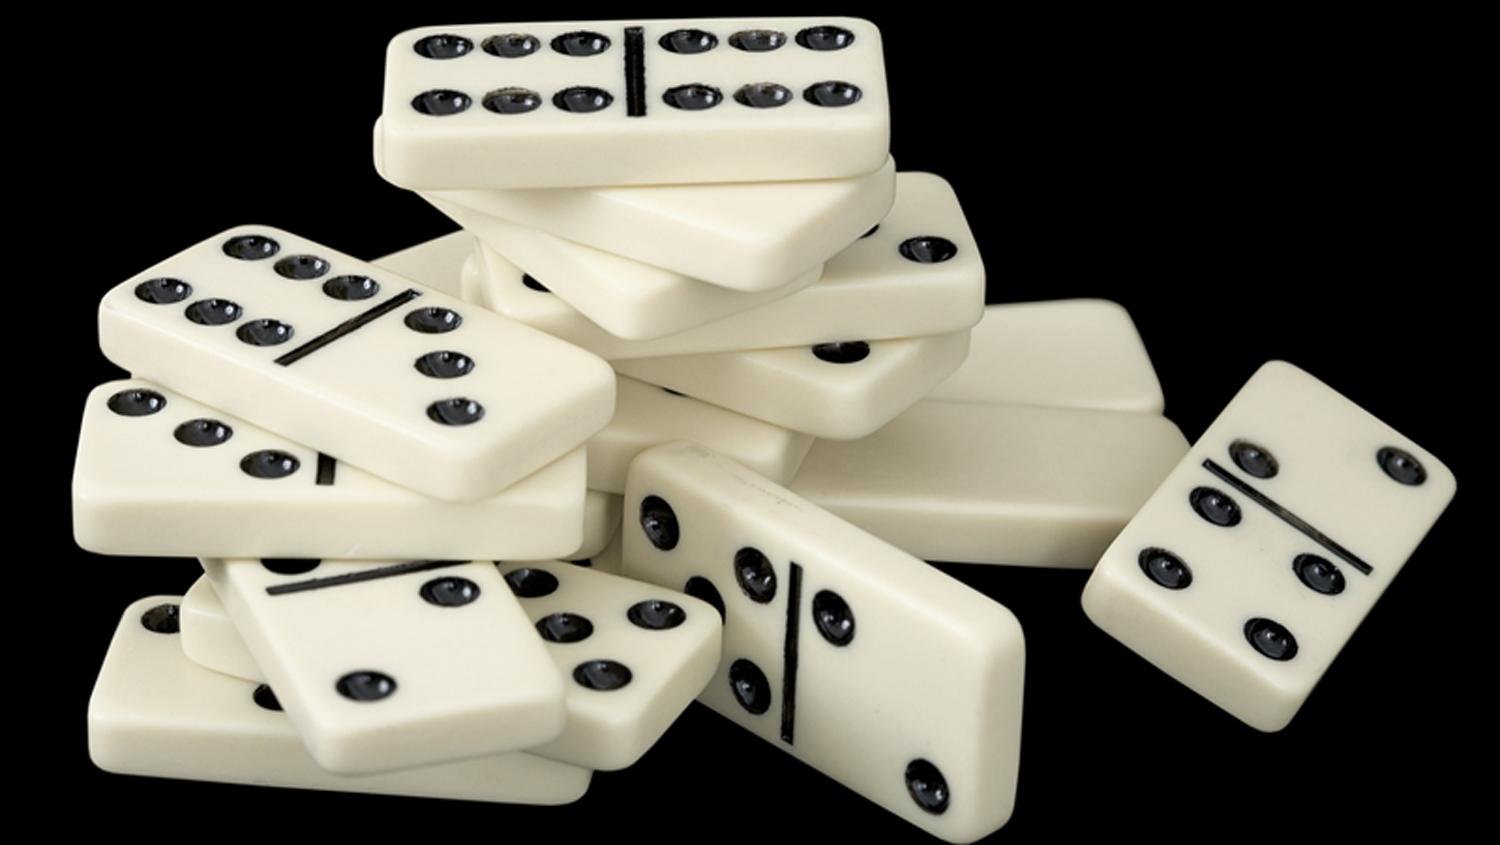 The Game Of Bones Dominoes